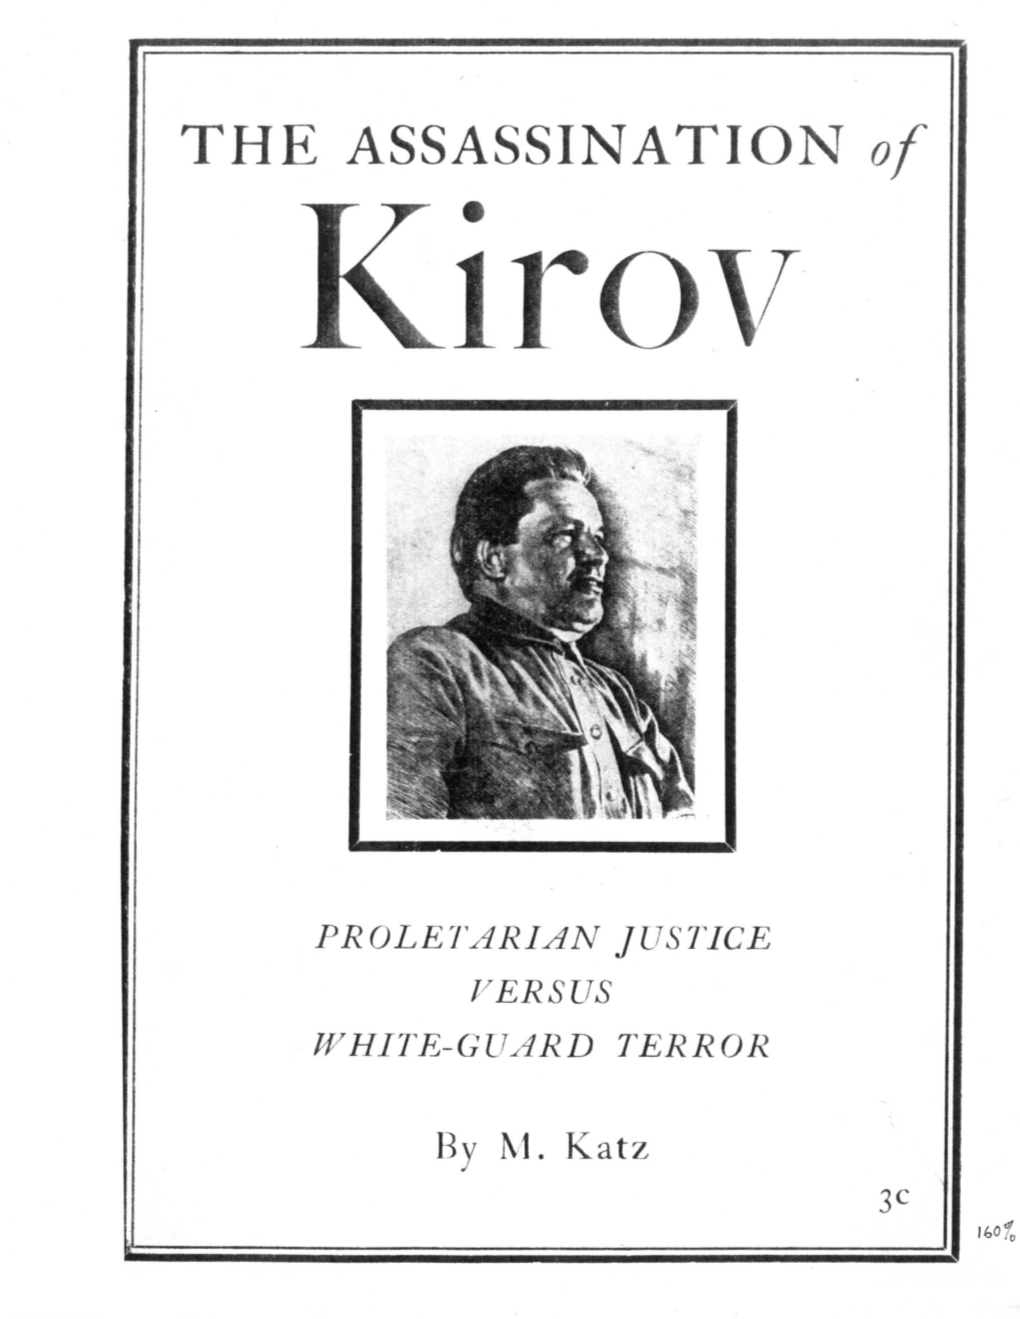 The Assassination of Kirov